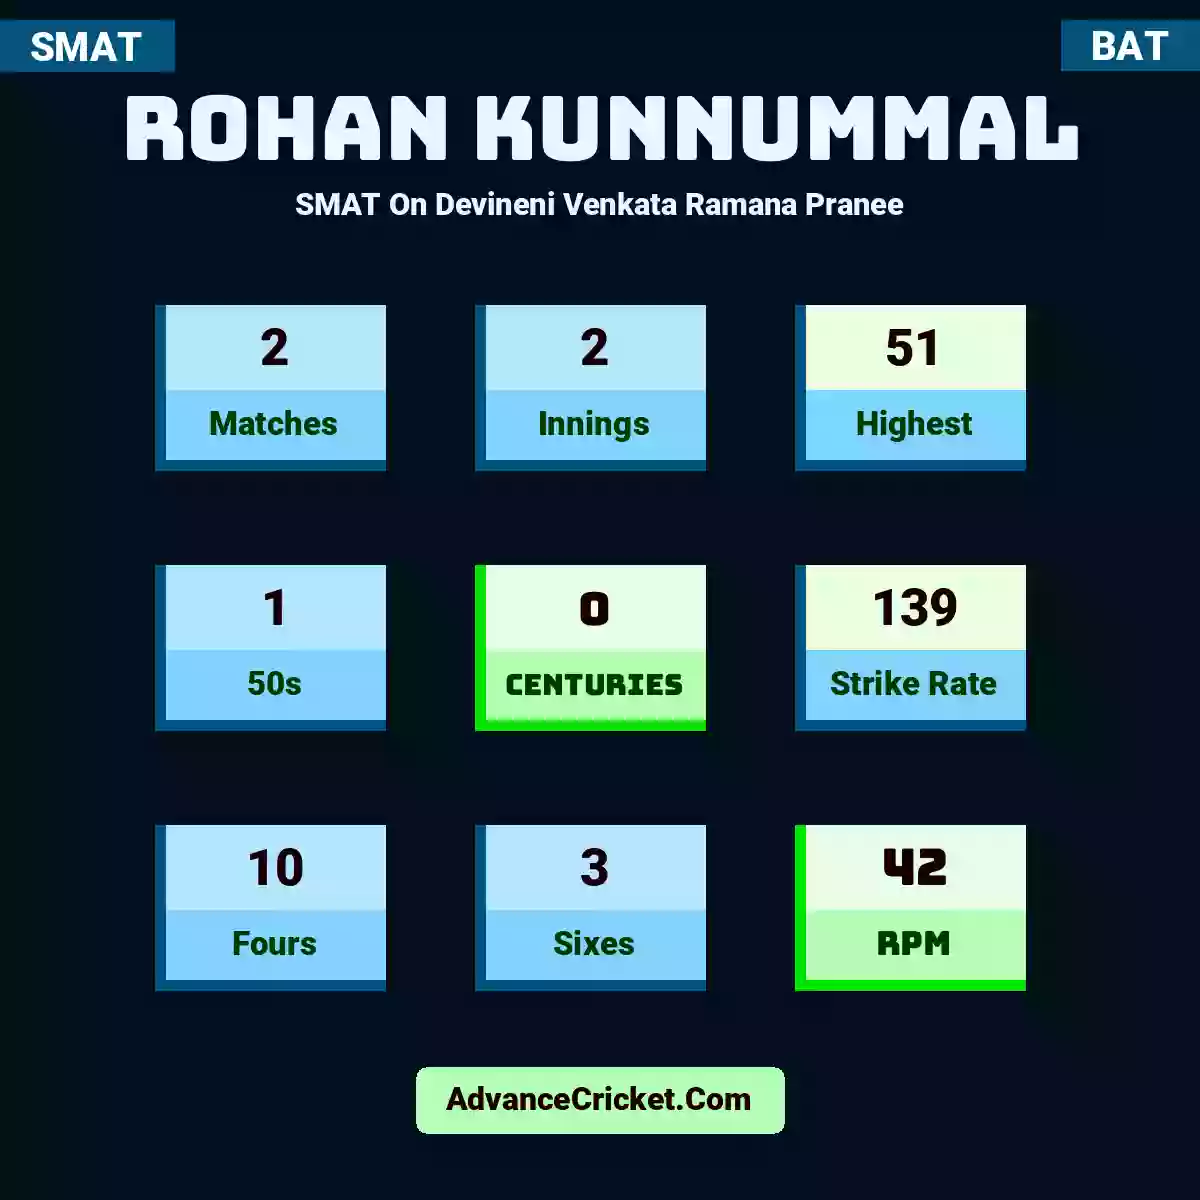 Rohan Kunnummal SMAT  On Devineni Venkata Ramana Pranee, Rohan Kunnummal played 2 matches, scored 51 runs as highest, 1 half-centuries, and 0 centuries, with a strike rate of 139. R.Kunnummal hit 10 fours and 3 sixes, with an RPM of 42.